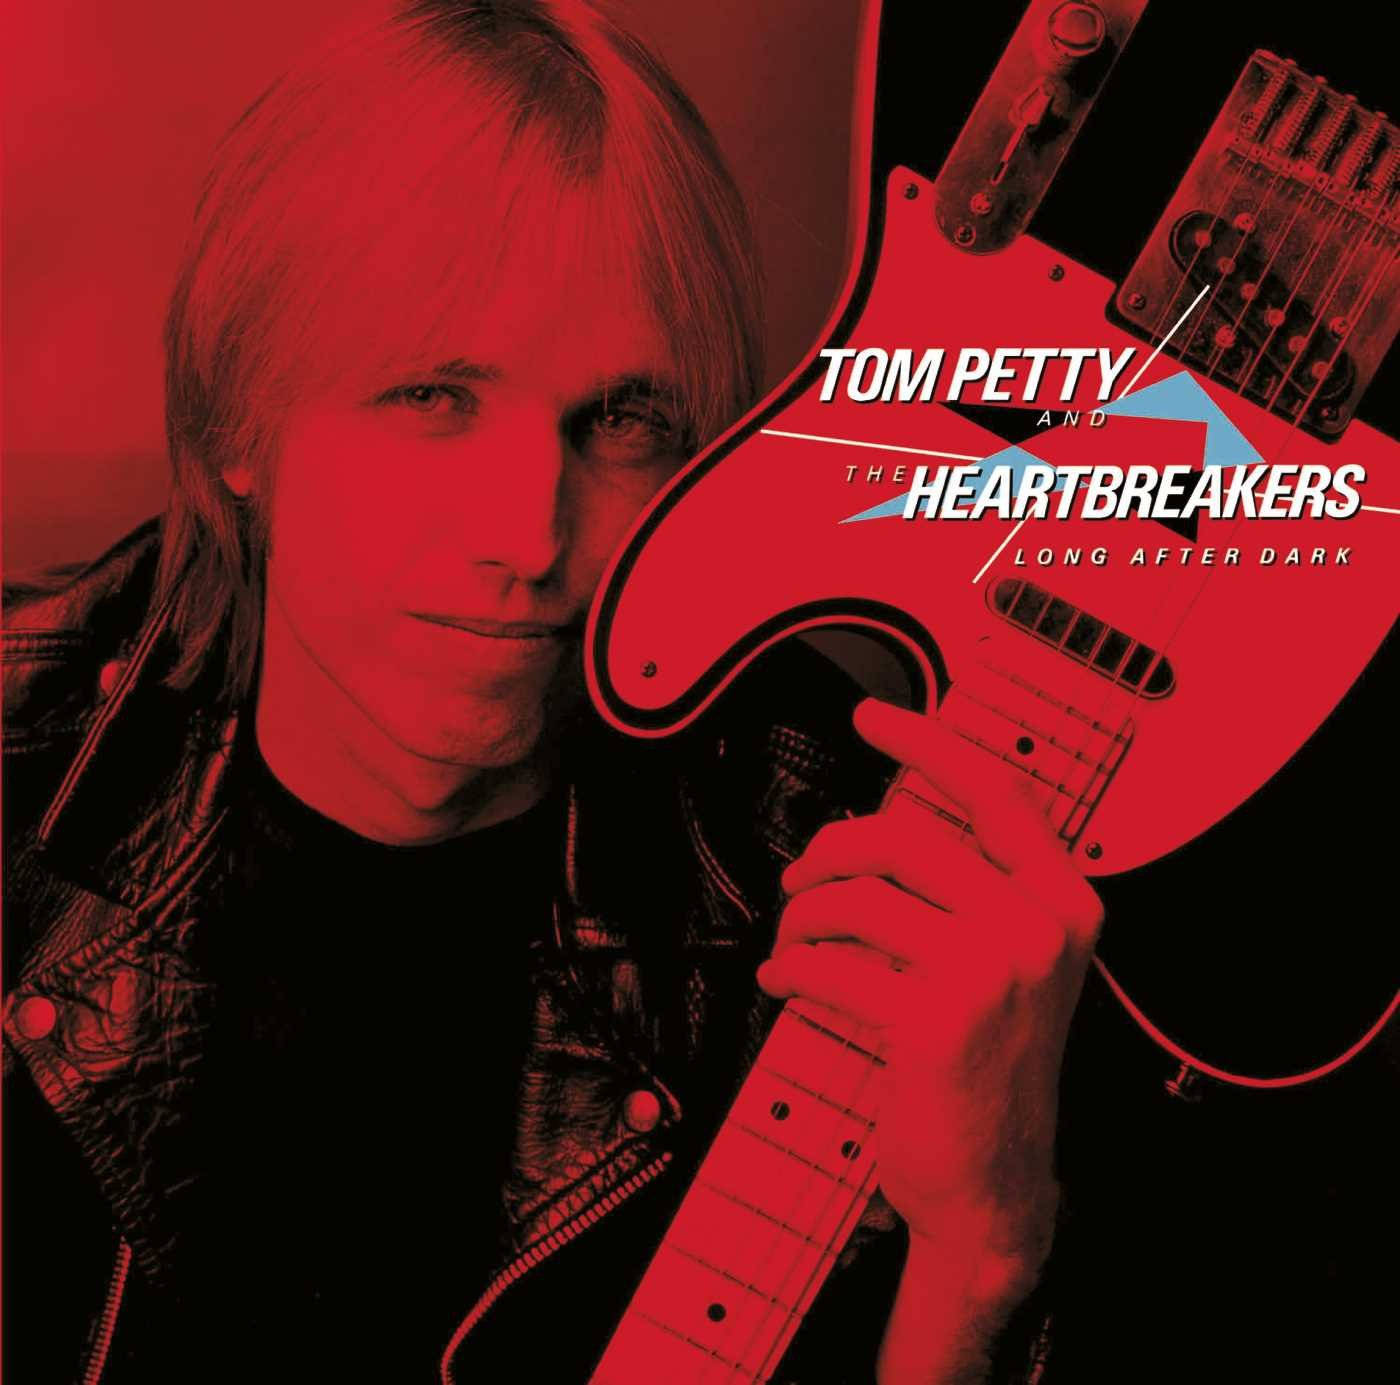 Tom Petty and the Heartbreakers - Long After Dark Album Artwork Wallpaper